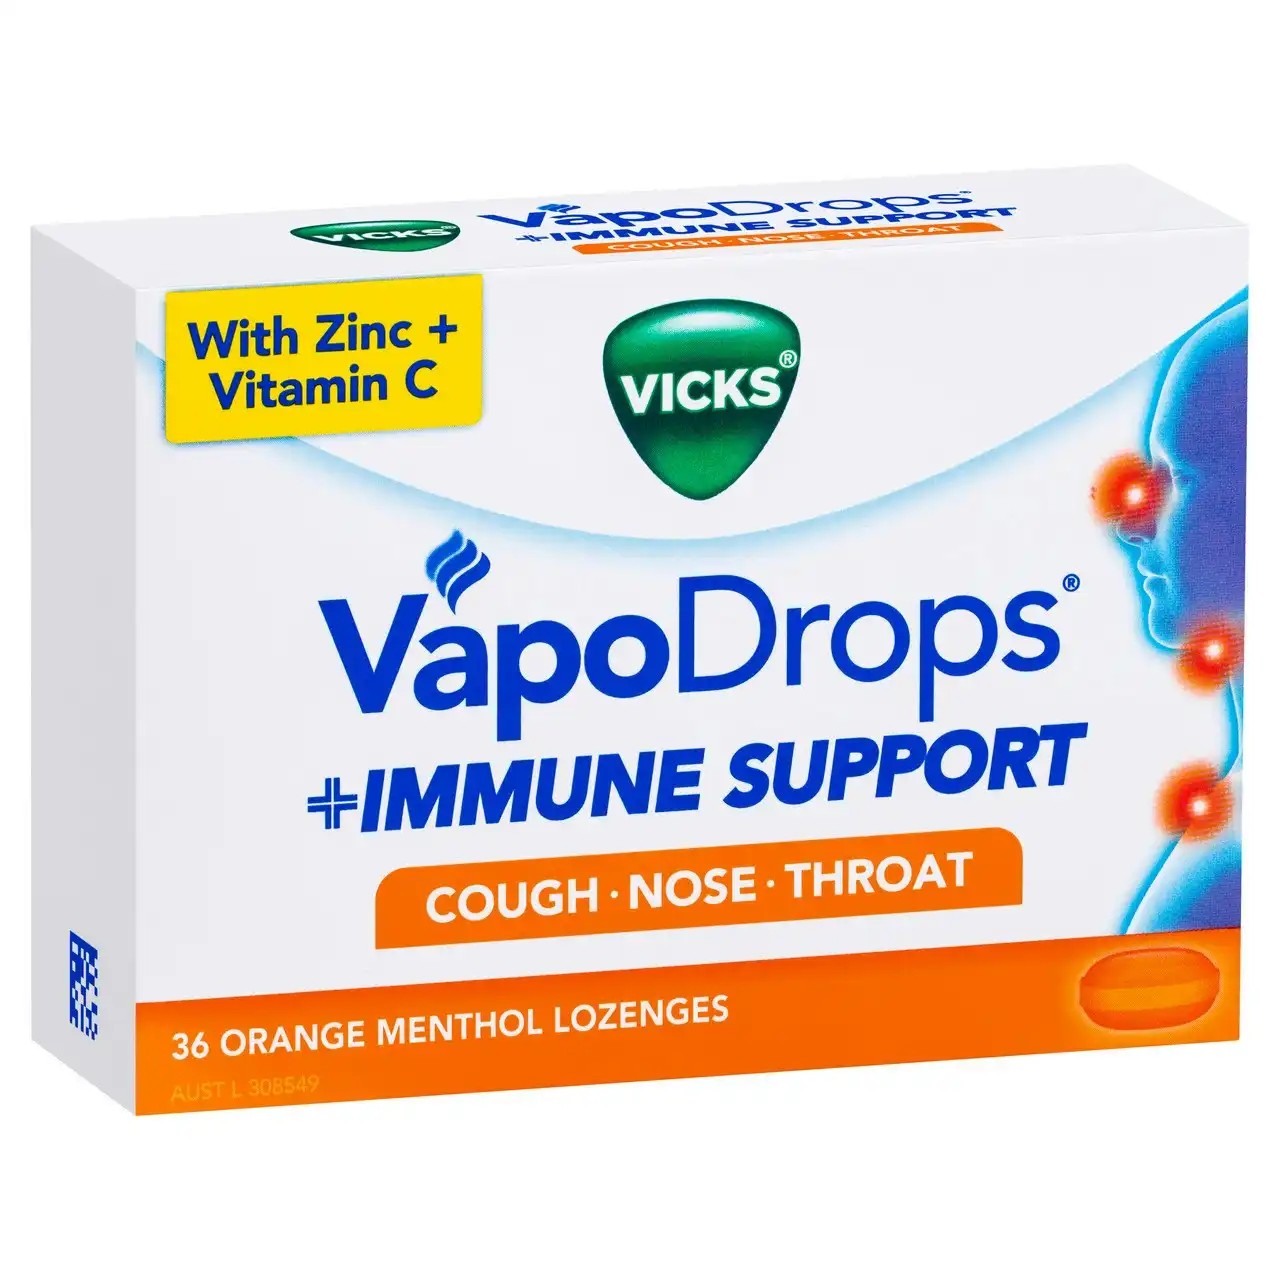 Vicks VapoDrops + Immune Support Orange Menthol, Nose, Throat & Cough Relief, Support Immune Health, 16 Lozenges